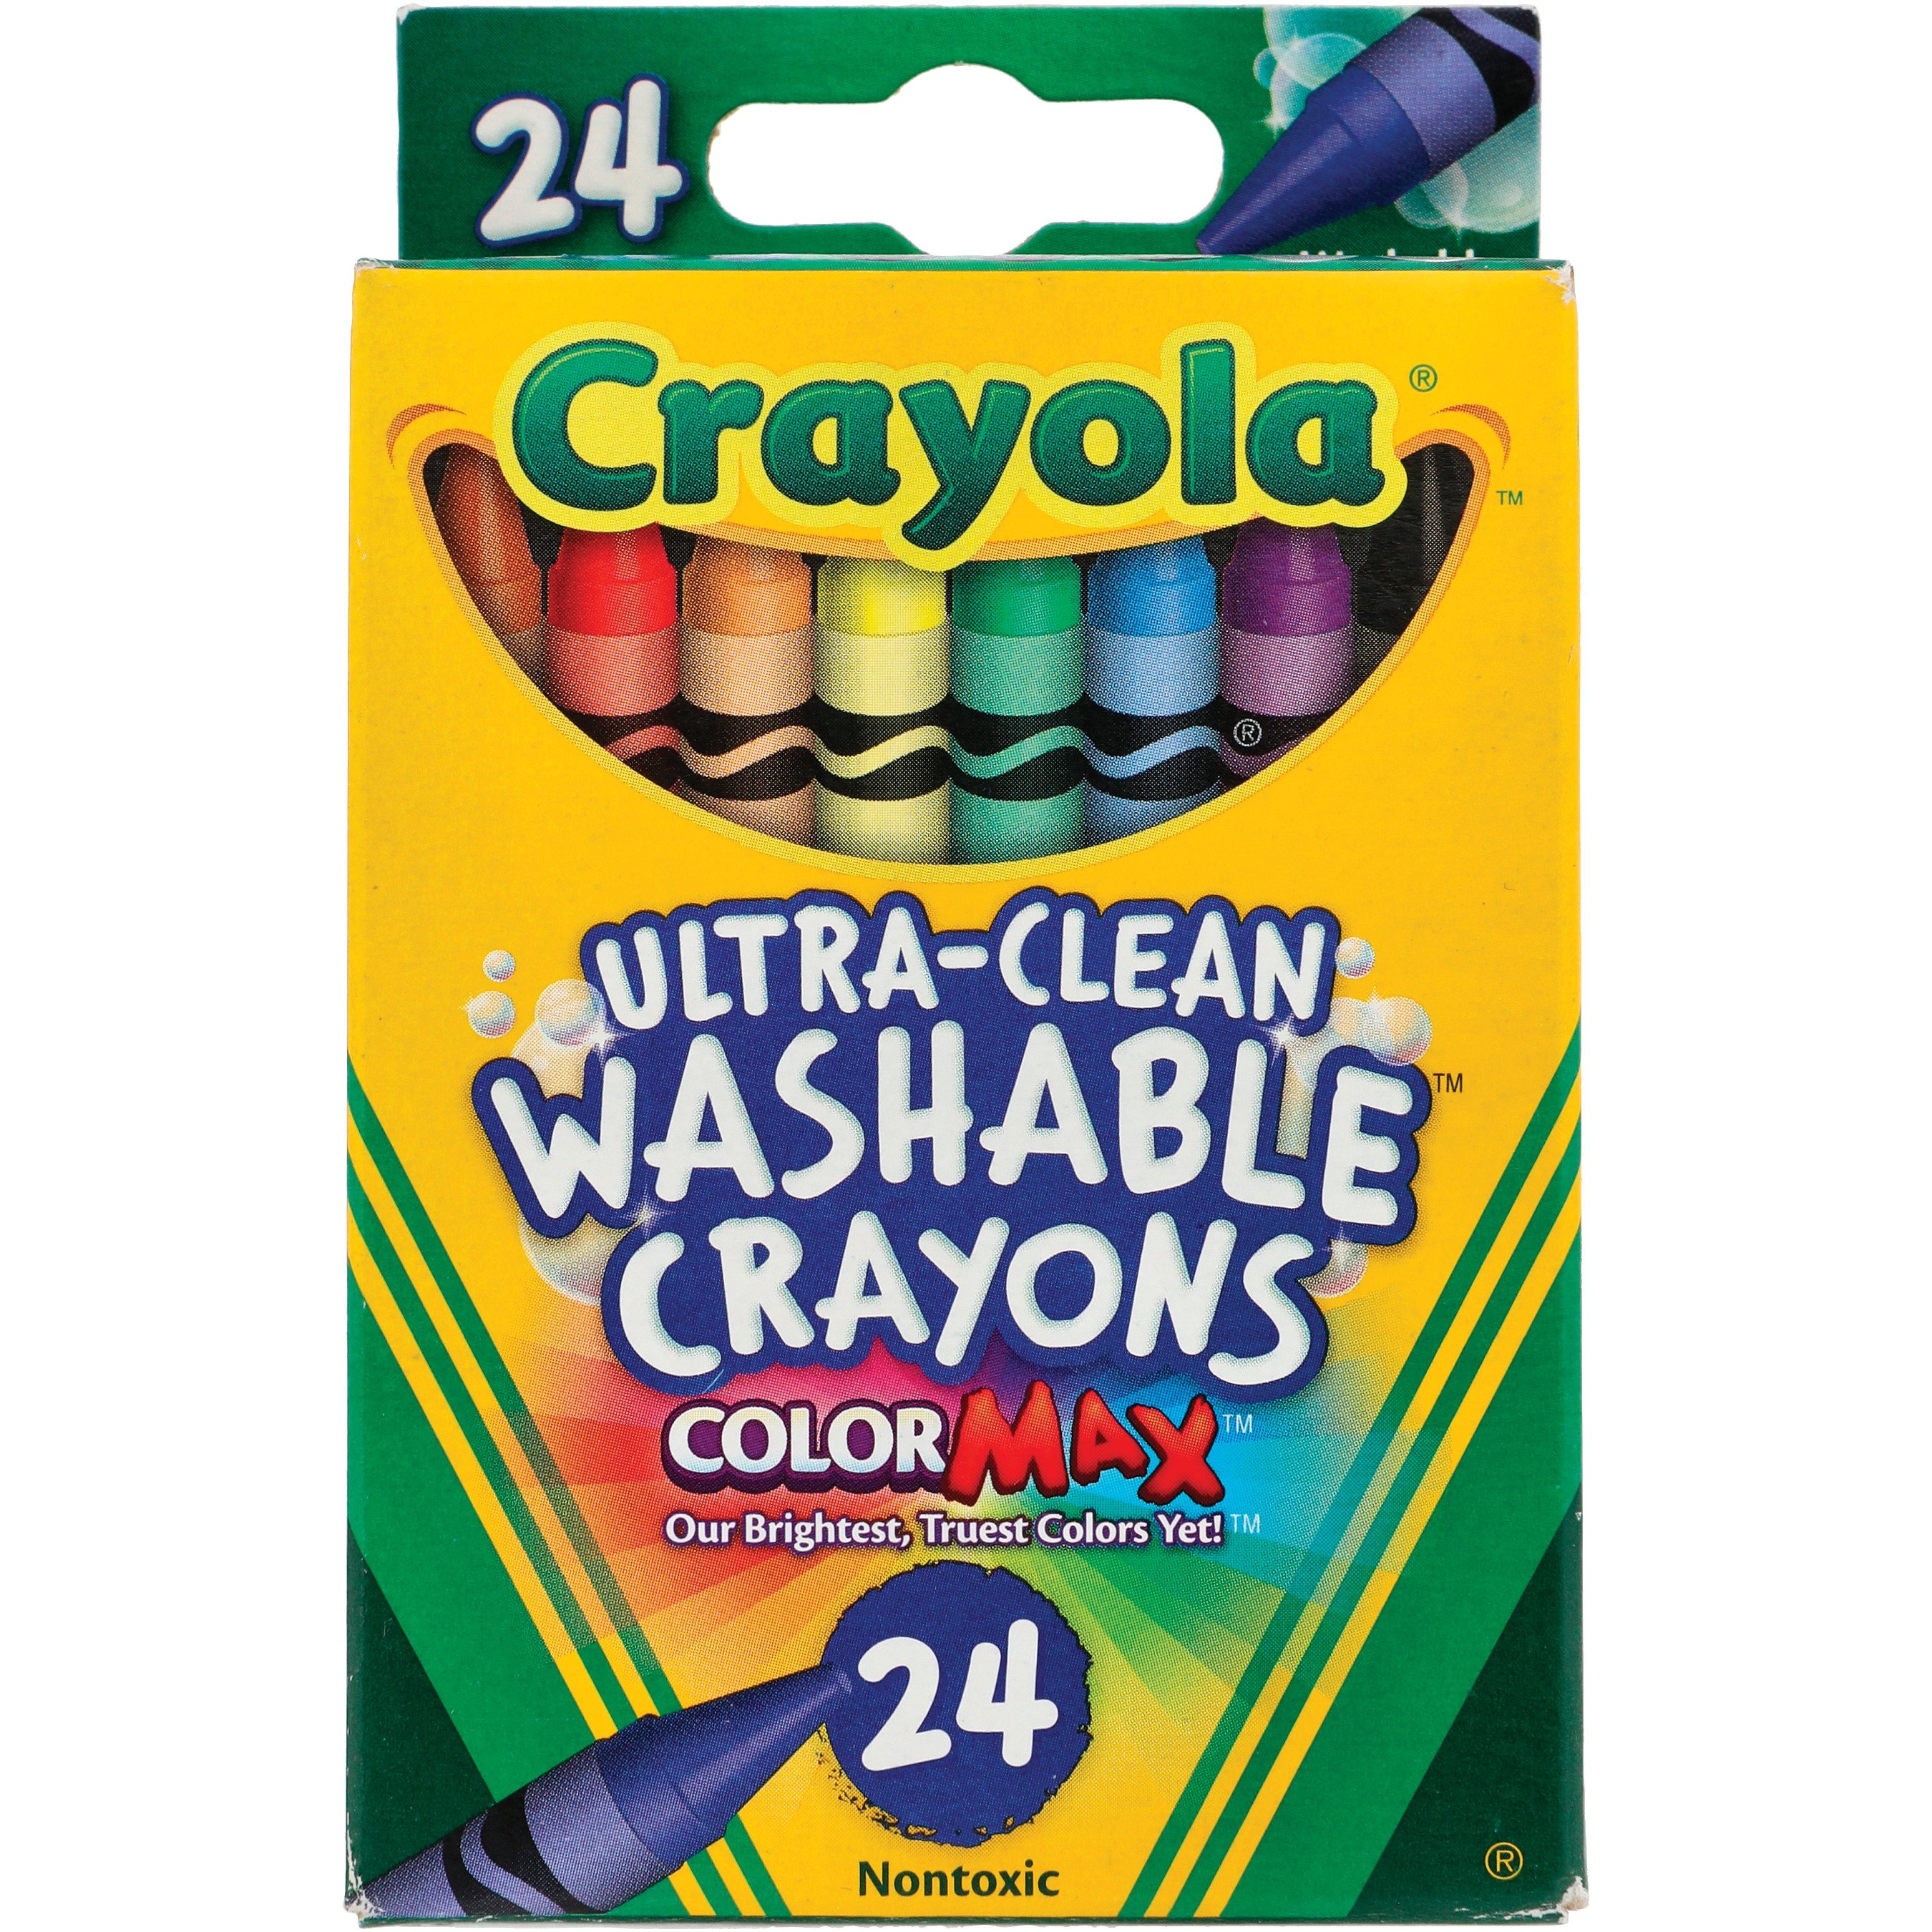 Download Crayola Washable Color Max Crayons - Shop Crayons at H-E-B